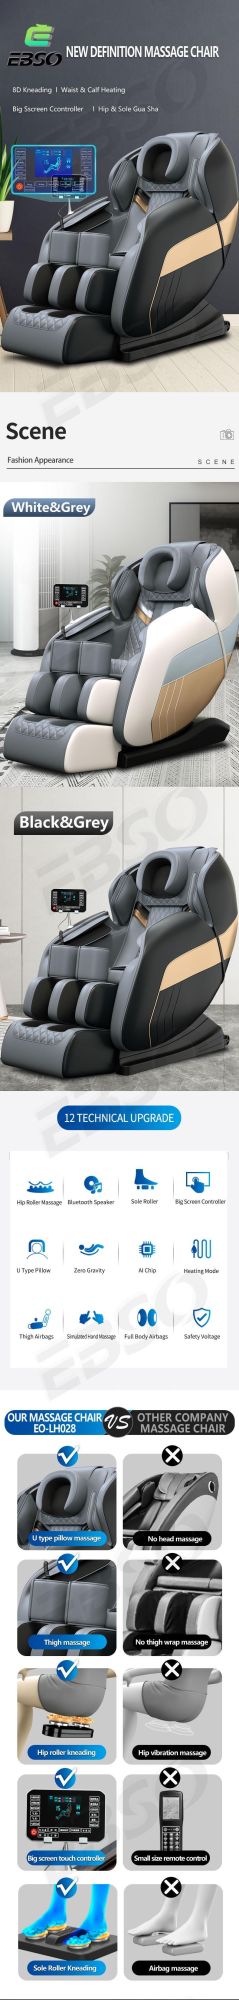 Wholesale OEM Intelligent Scanning System Program 4D Full Body Zero Gravity Shiatsu Adjustable Electric Massage Chair